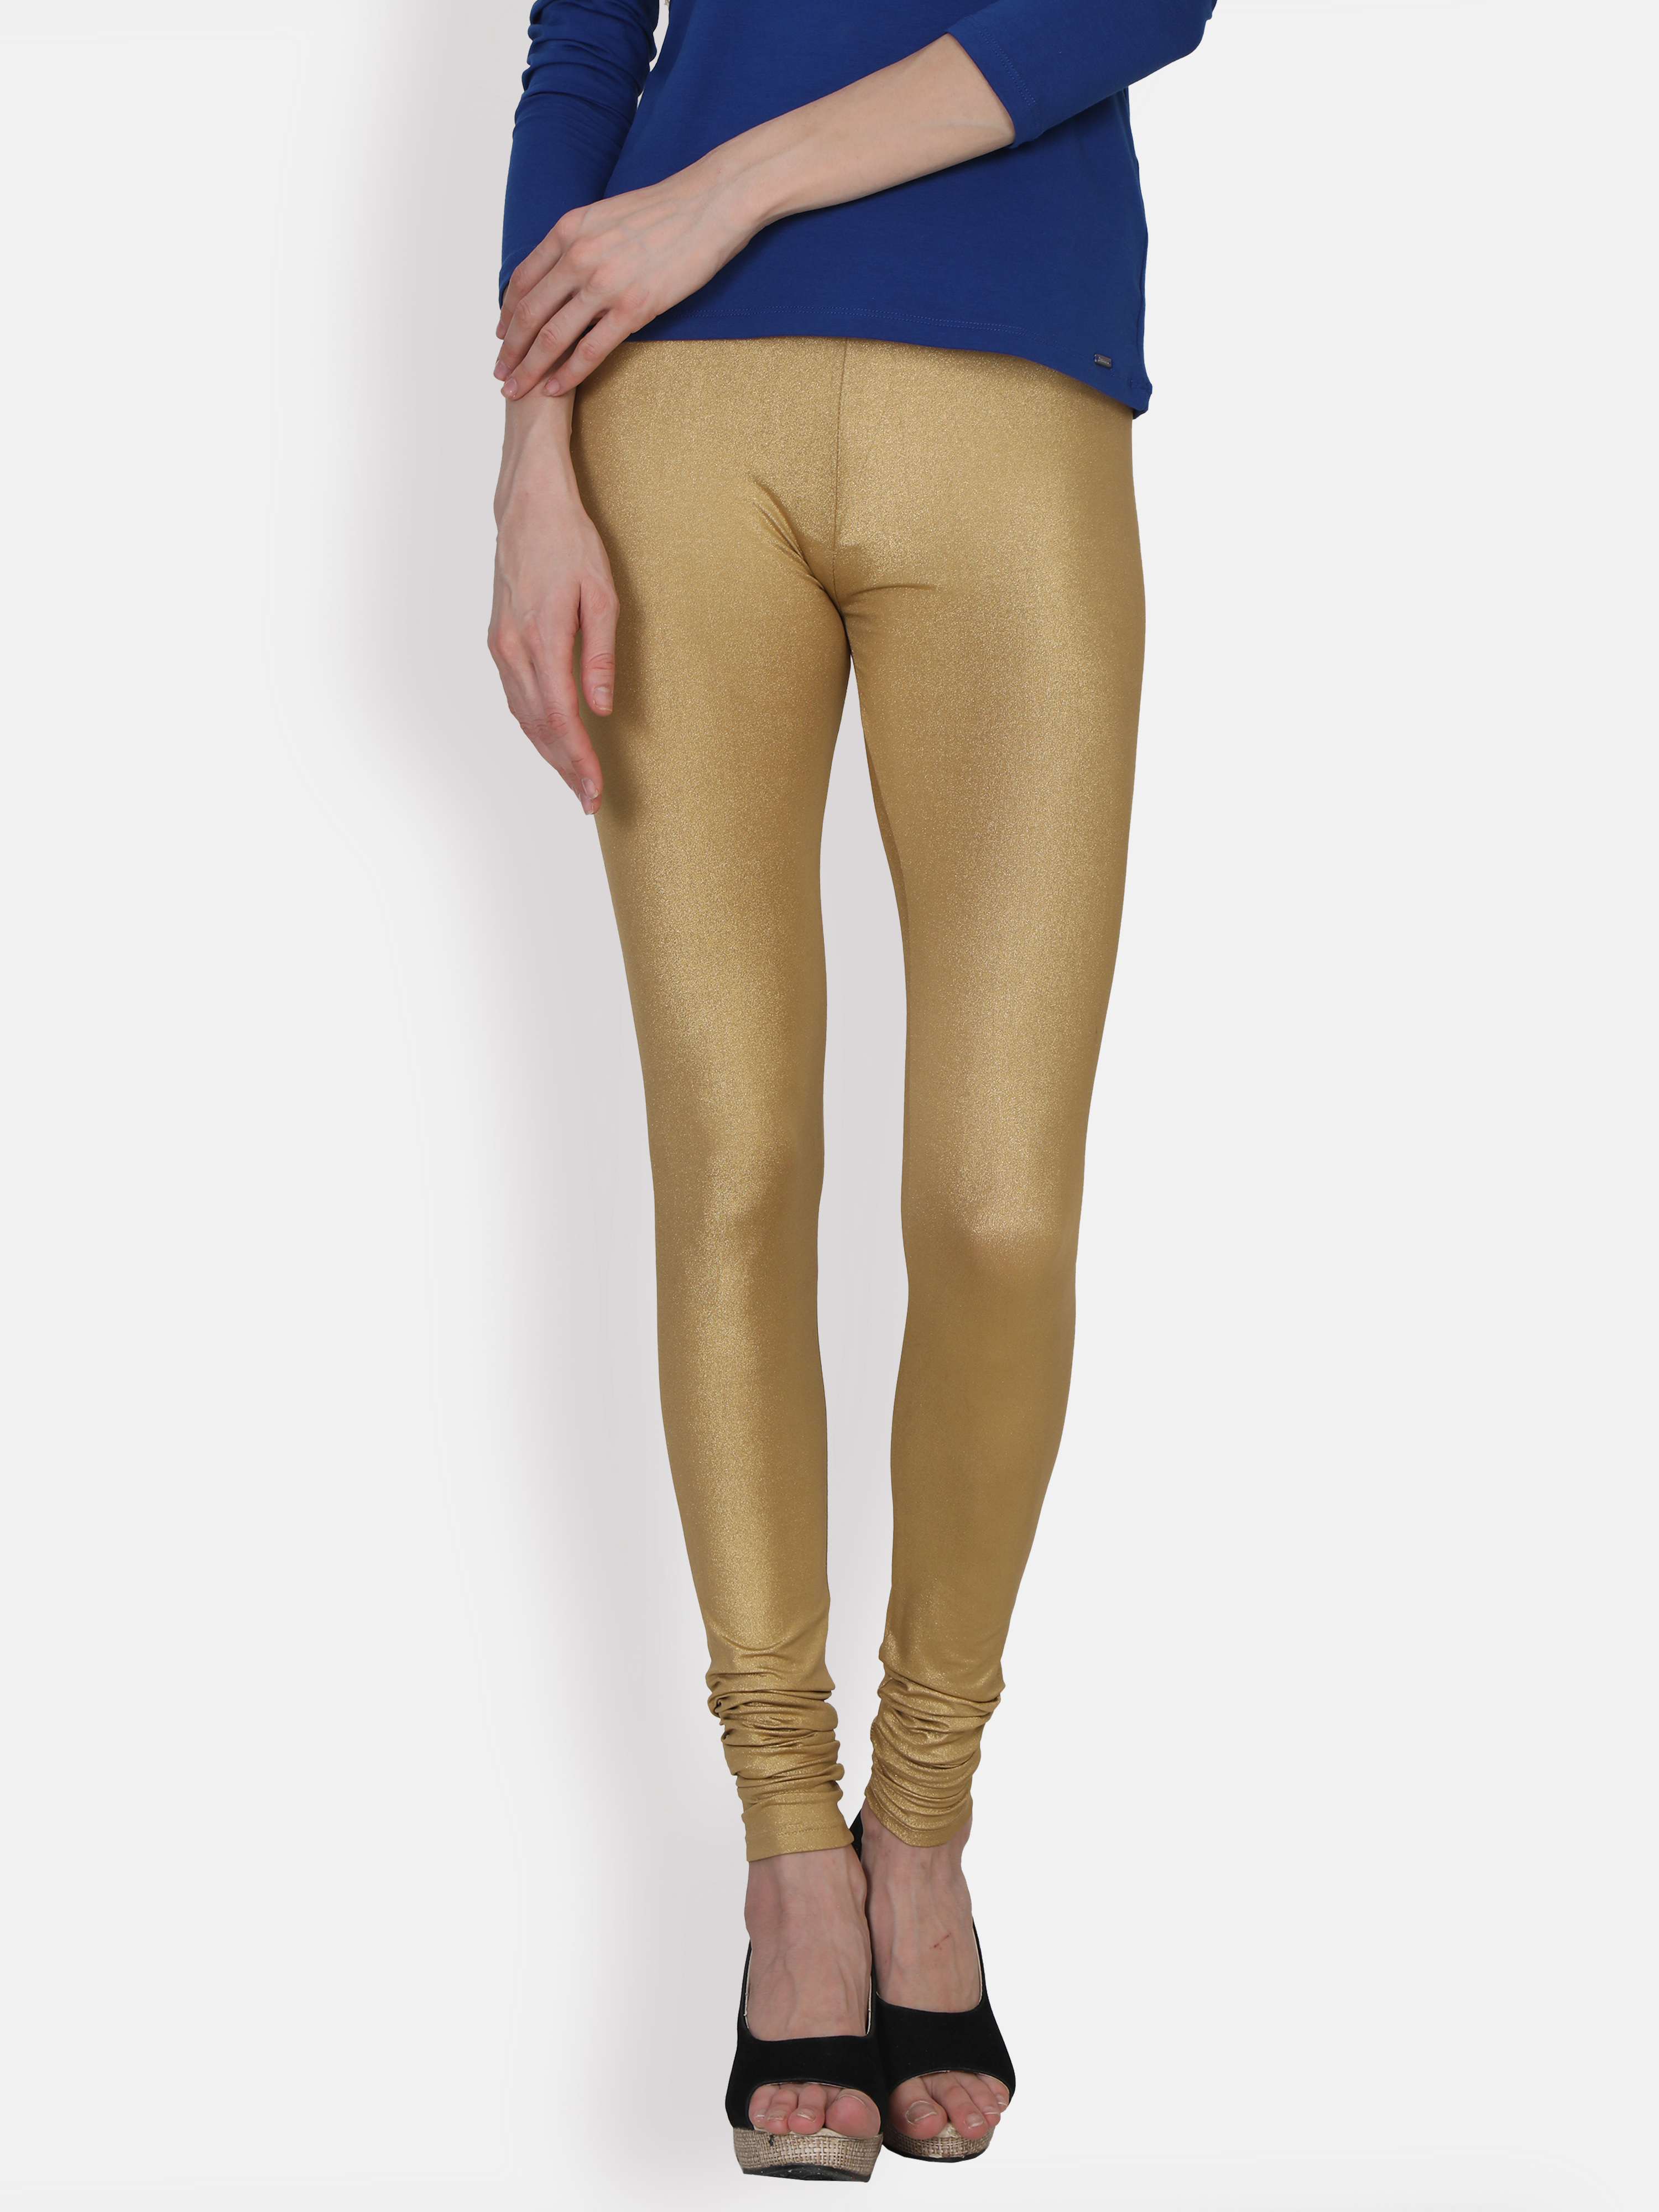 Golden Color Leggings